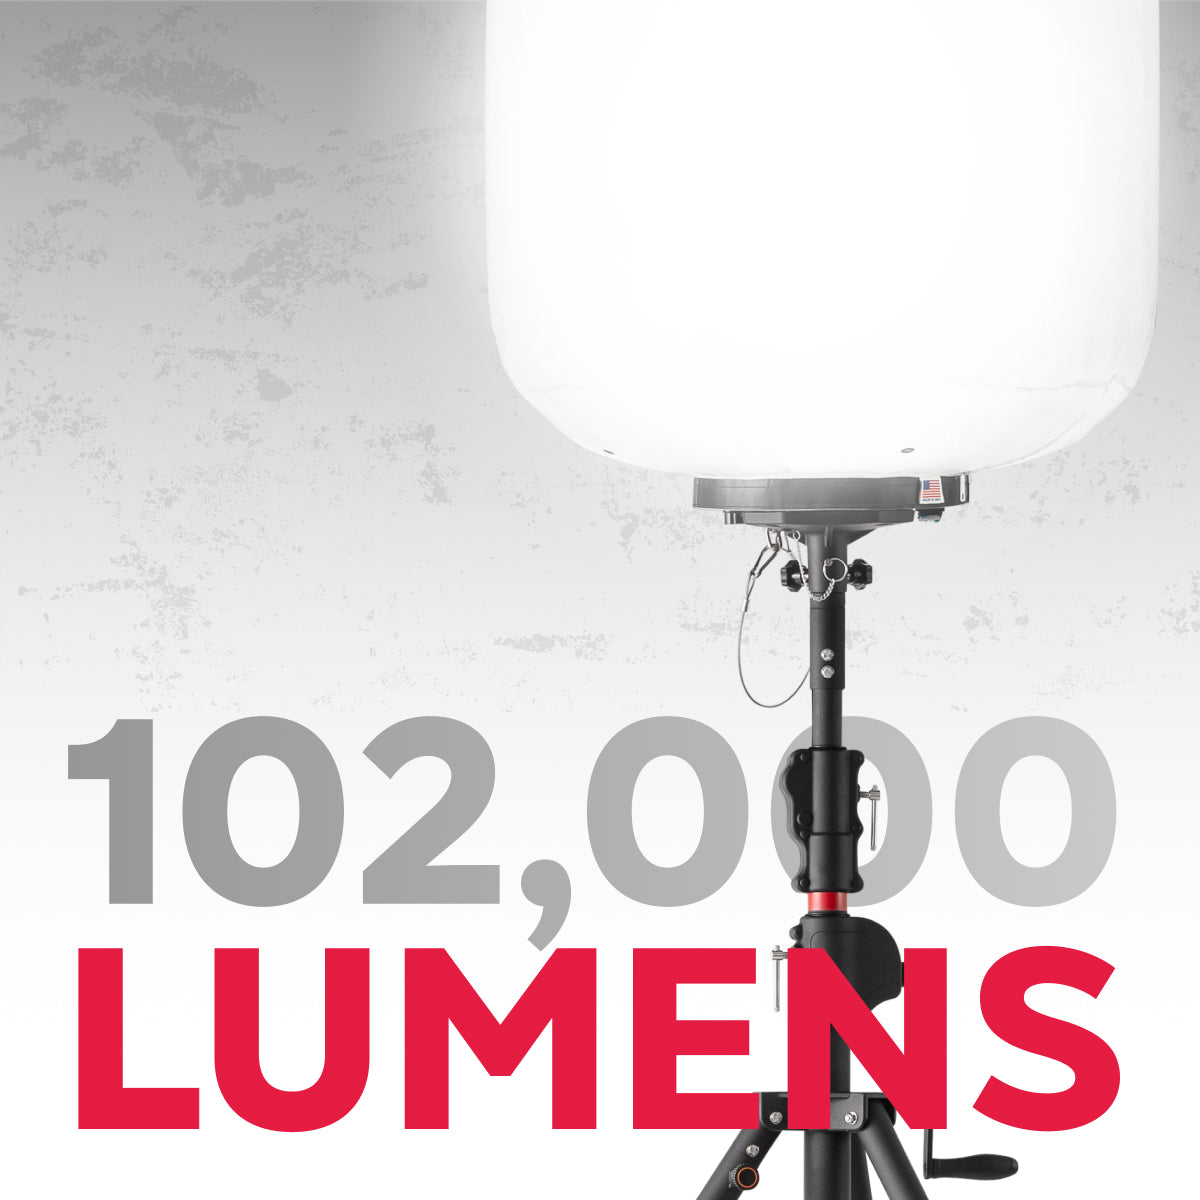 102,000 Lumens LED Balloon Light Tower